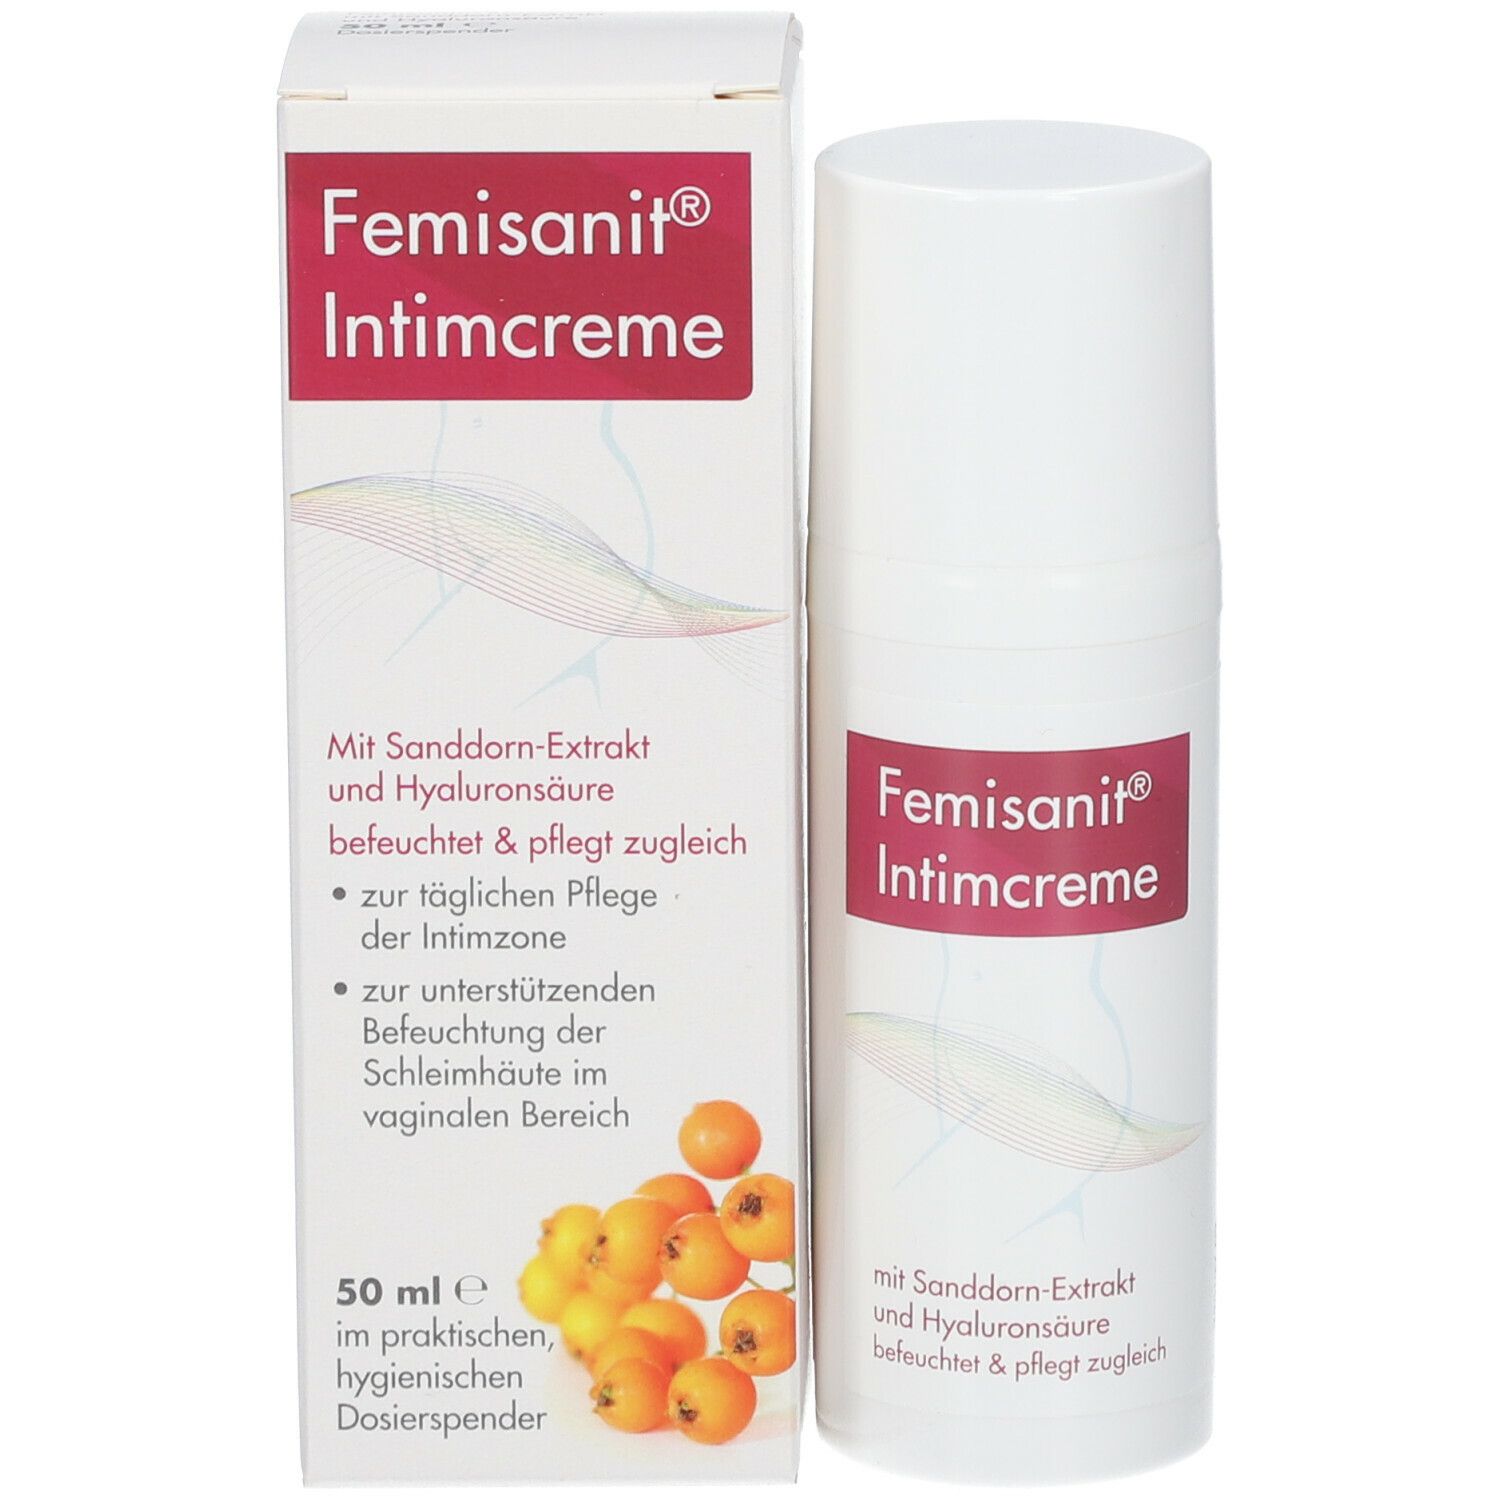 Femisanit® Intimcreme